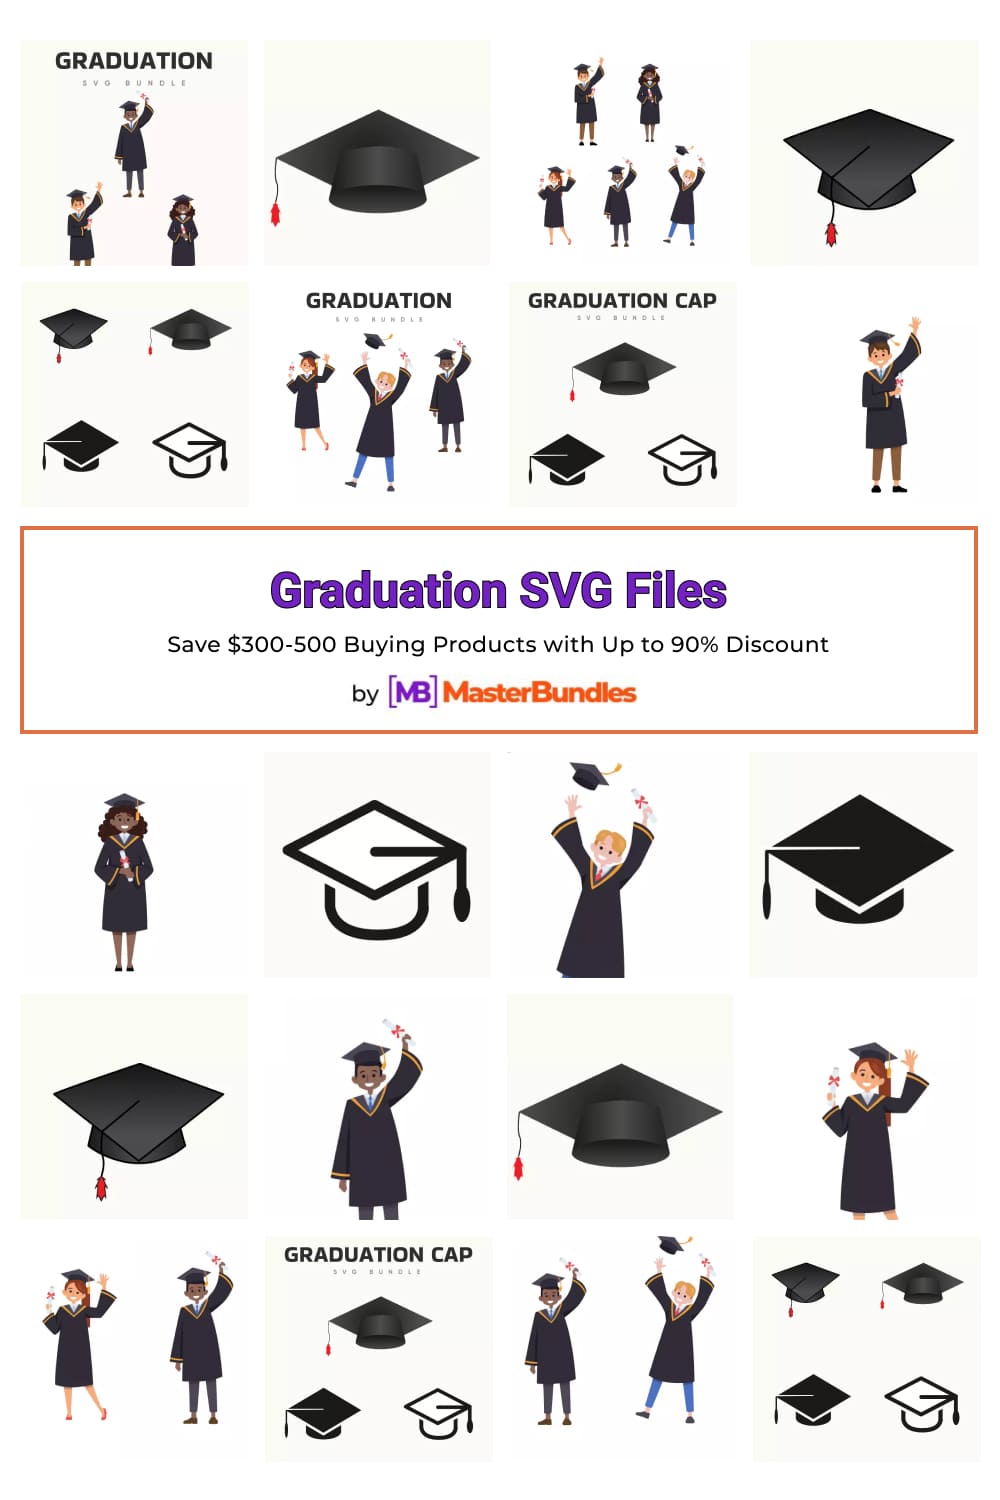 Graduation SVG Files Pinterest image.